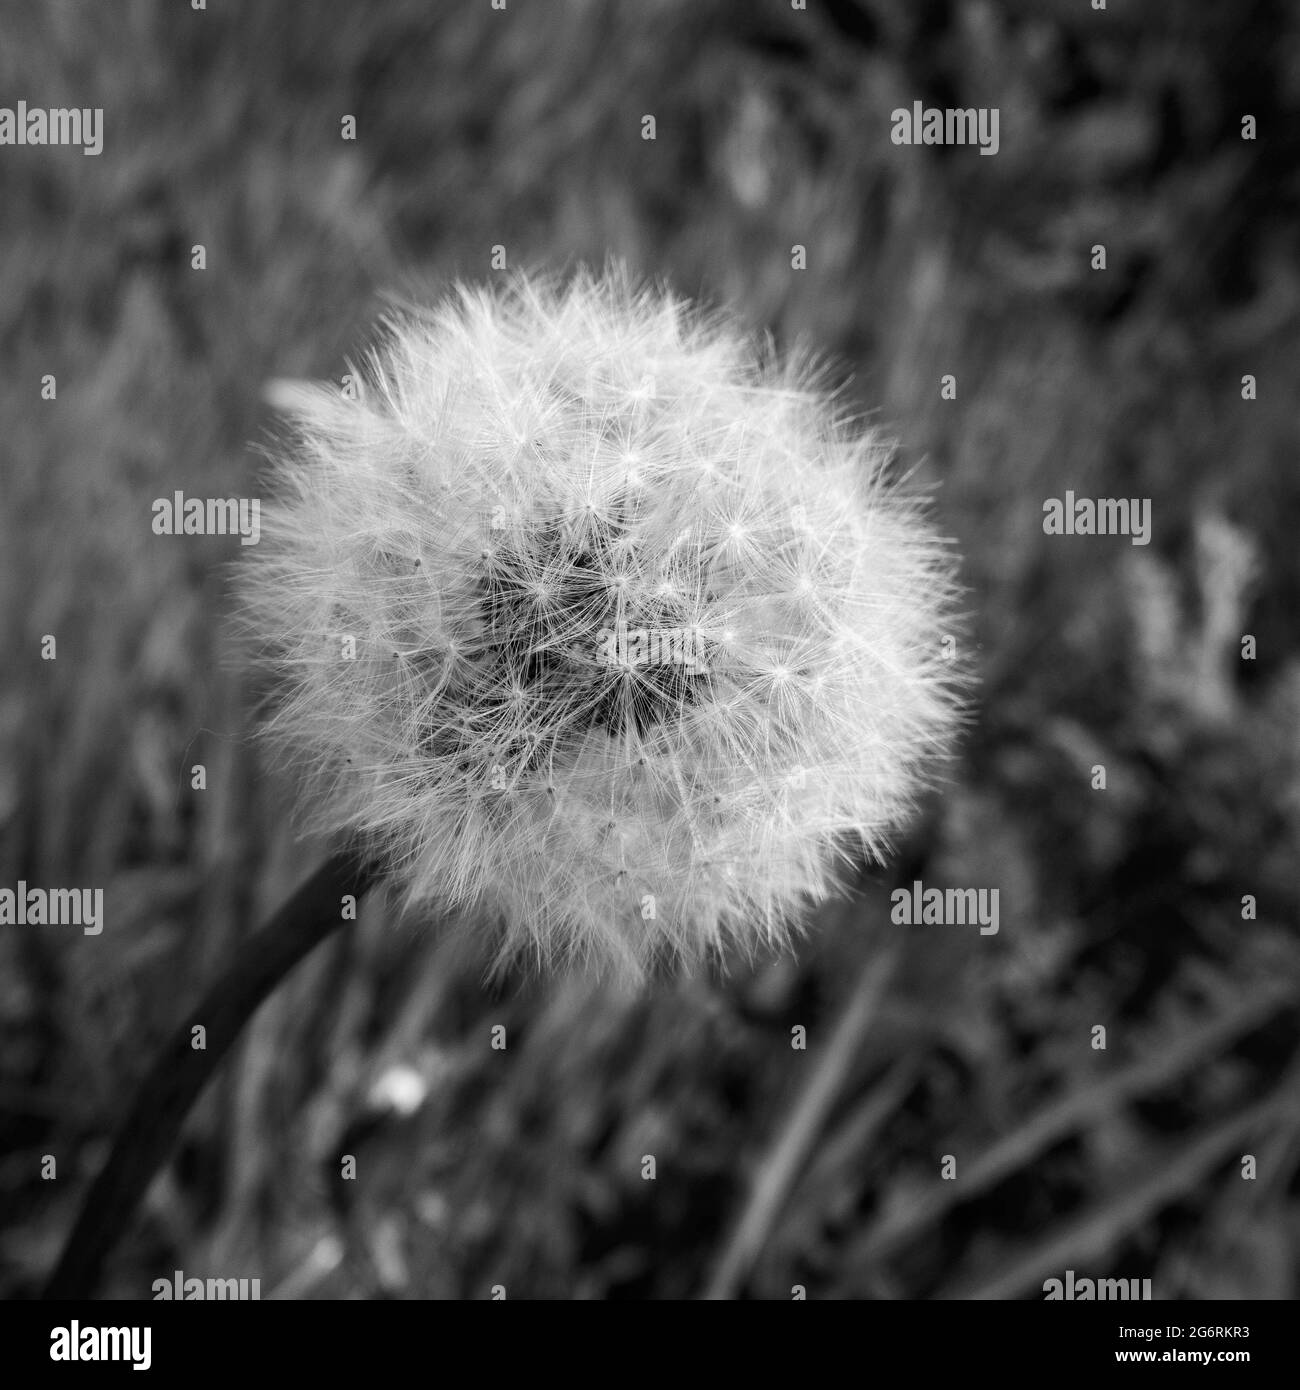 beautiful dandelion seed head in black and white beautiful dandelion seed head in black and white Stock Photo